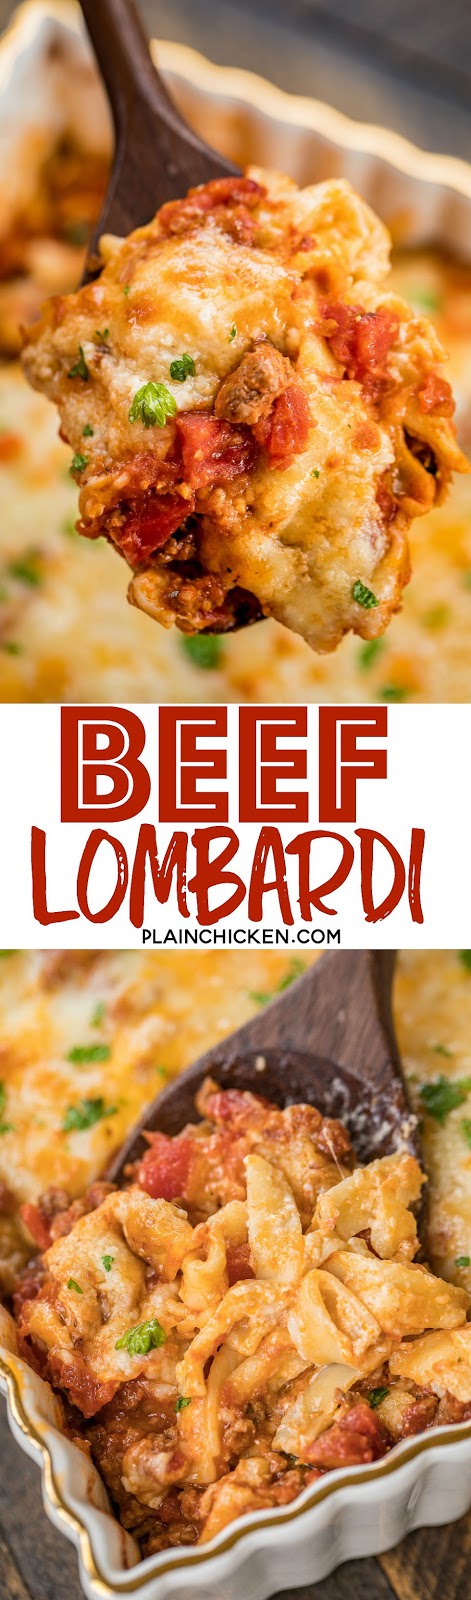 Beef Lombardi Casserole | Plain Chicken